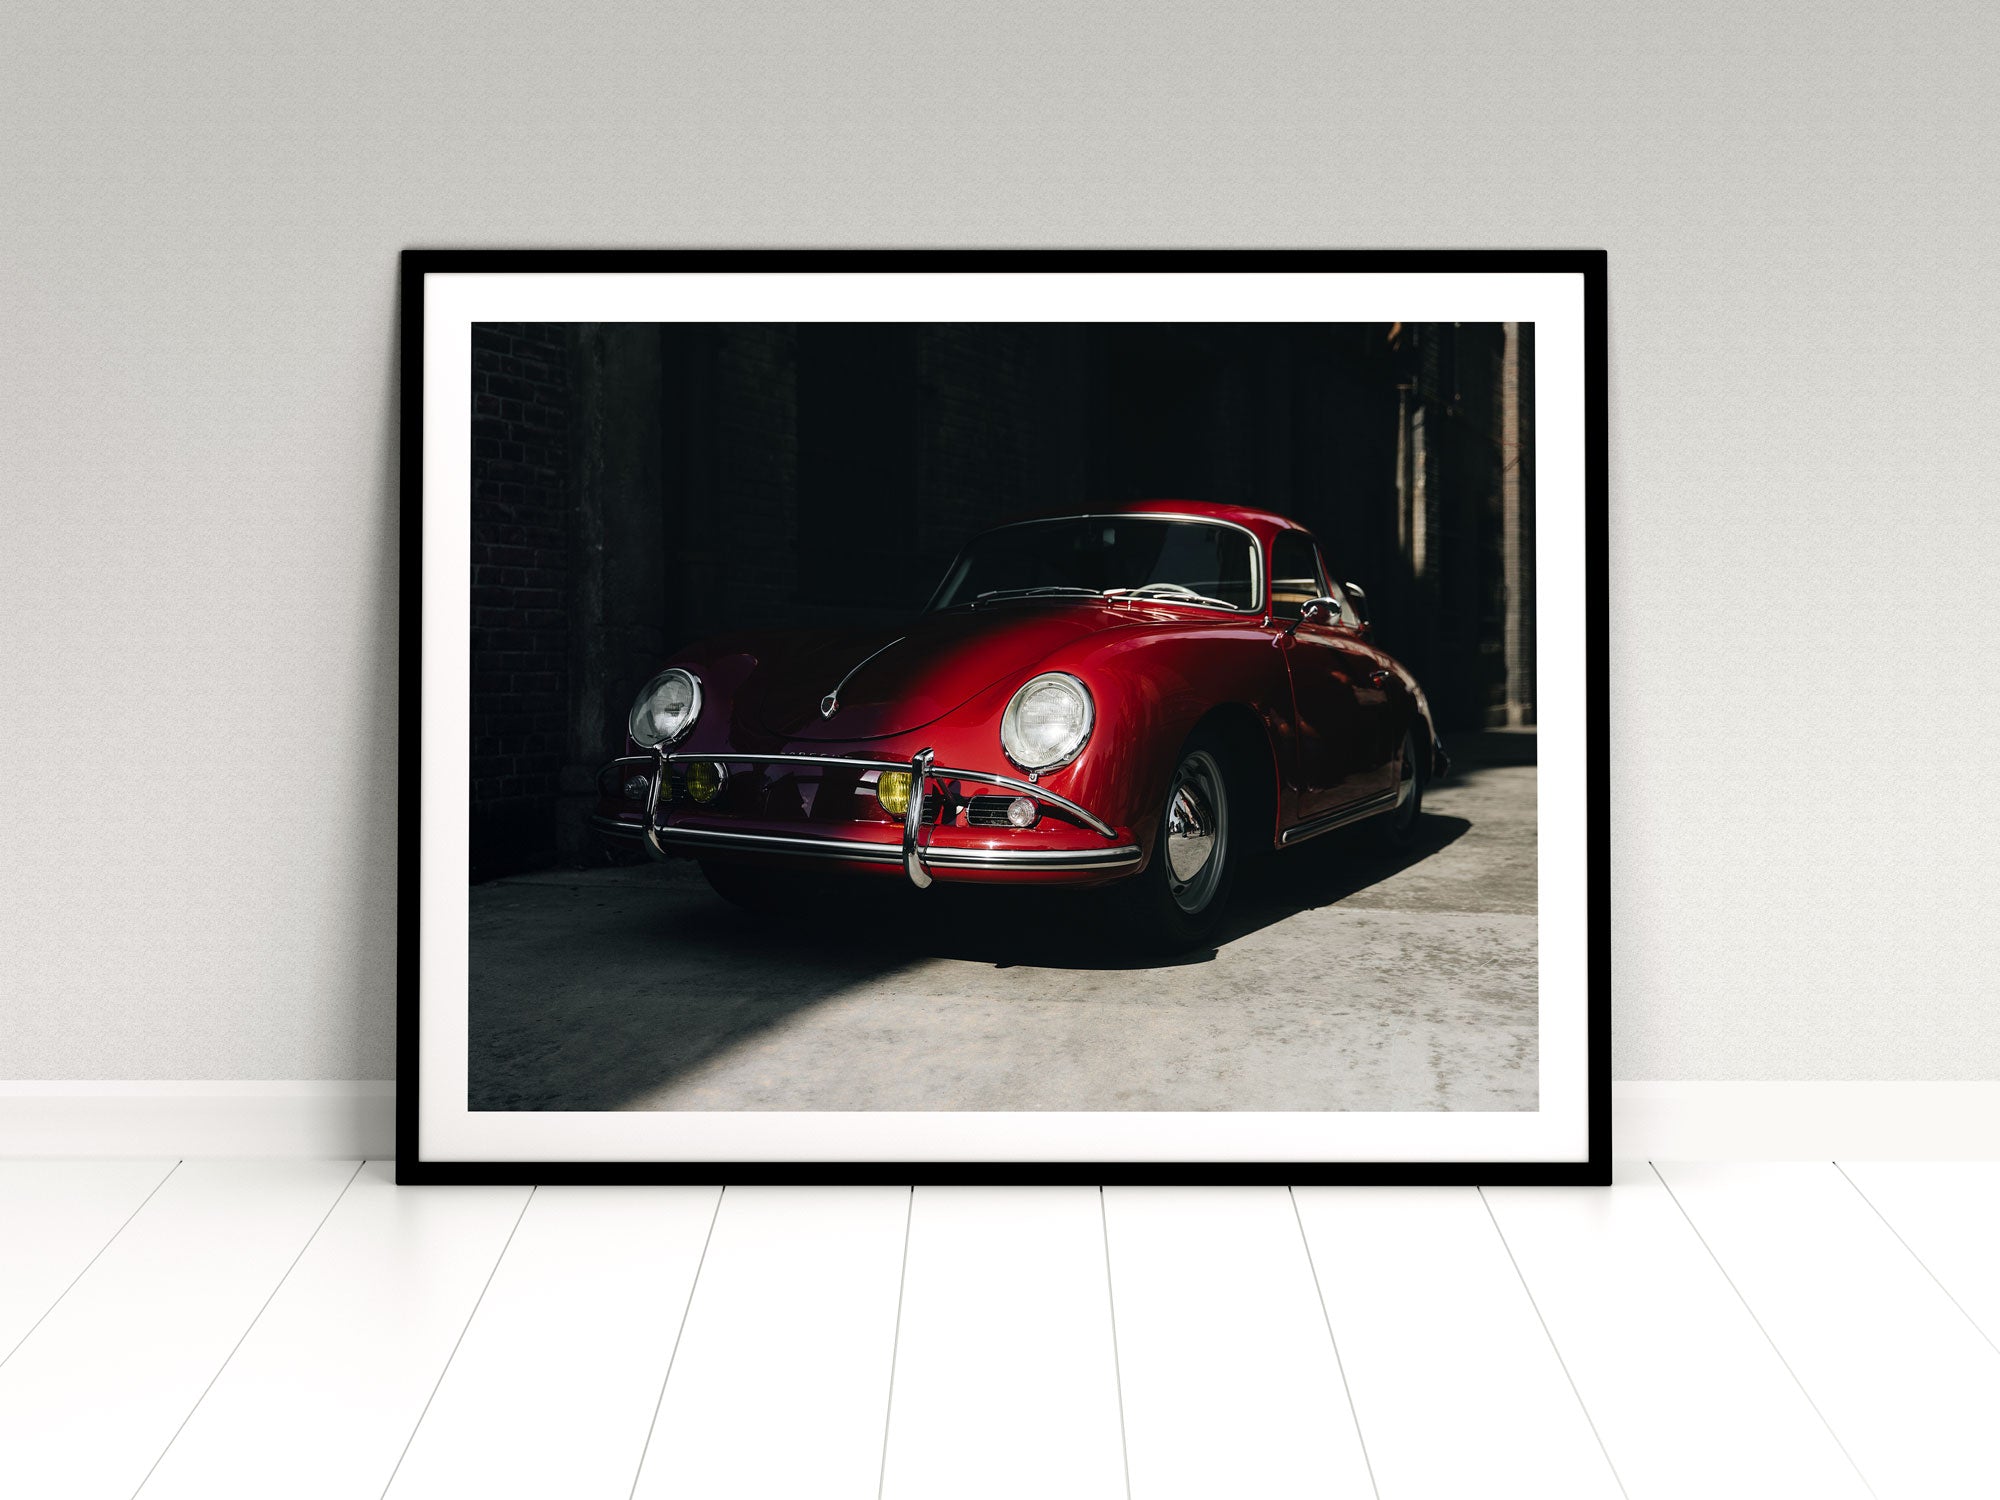 vintage porsche 356, huseyin erturk, car prints, automotive photography